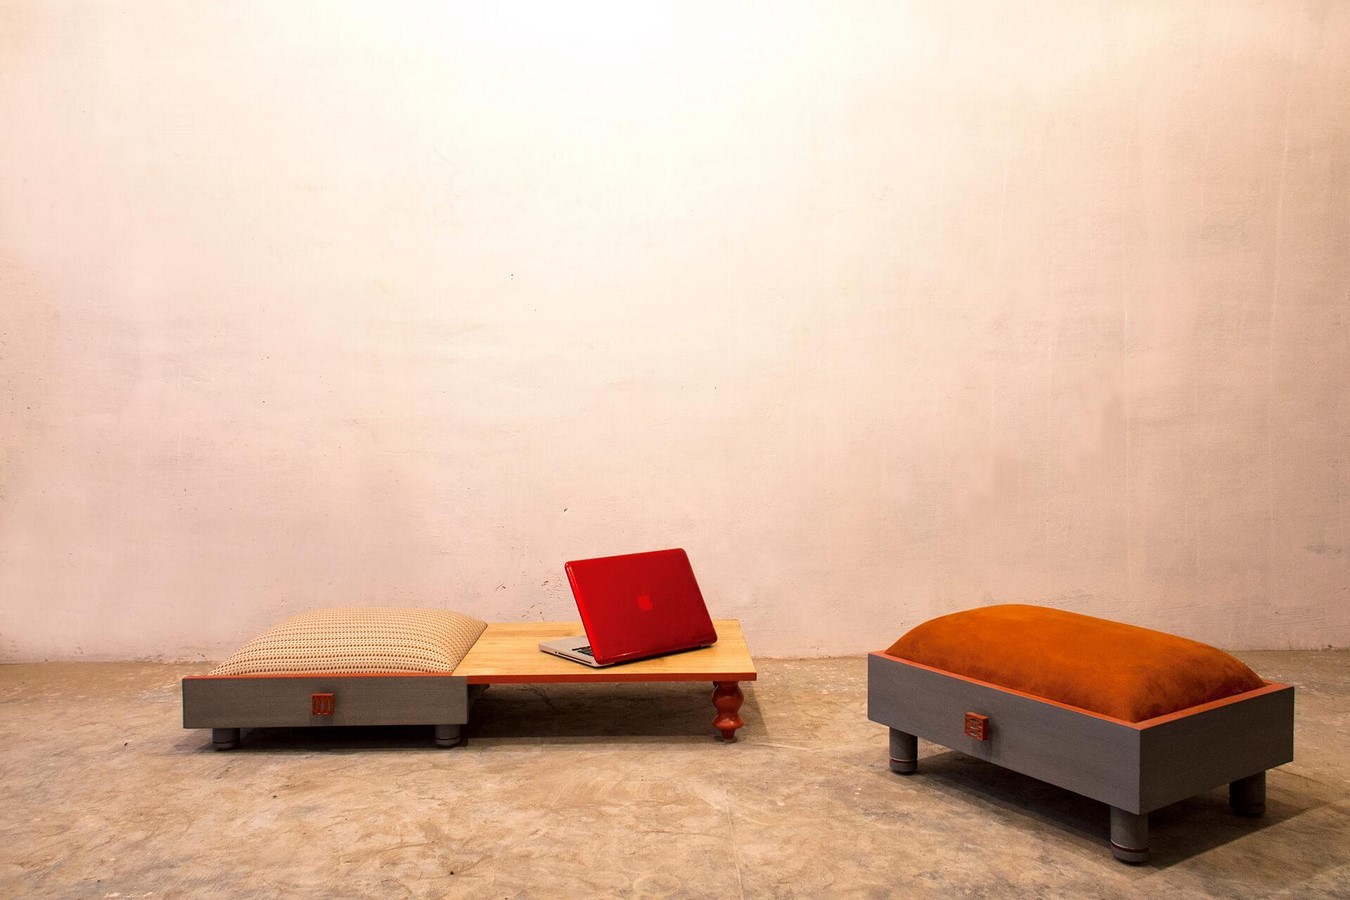  Indian Furniture designers - Vrinda Mathur, Navya Aggarwal, and Sahej Bhatia- Studio Wood - Sheet1